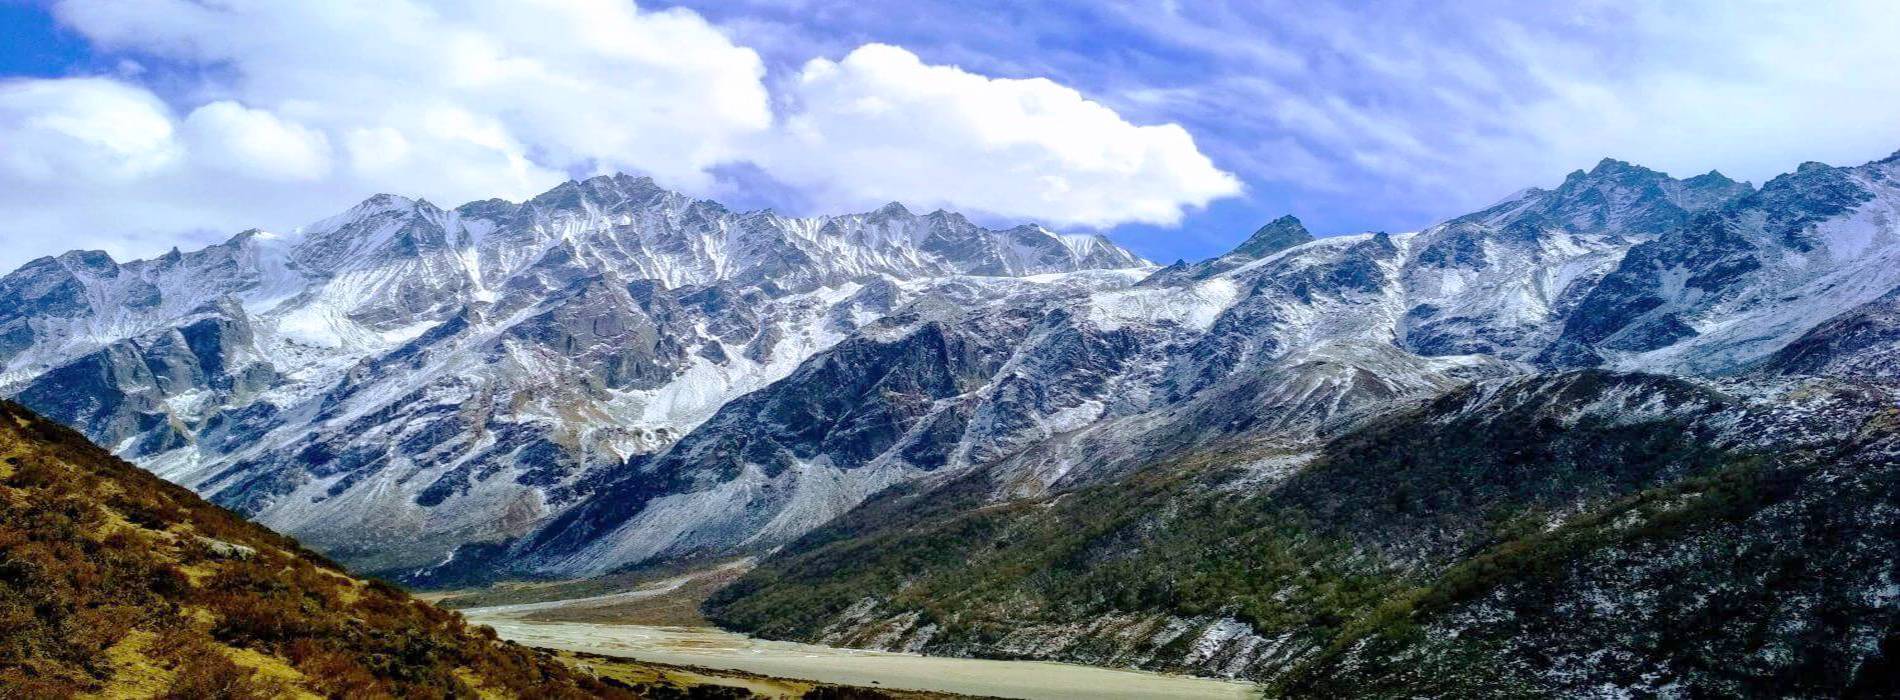 Langtang valley Trek 10 Days: Easy Trekking Trail In Nepal